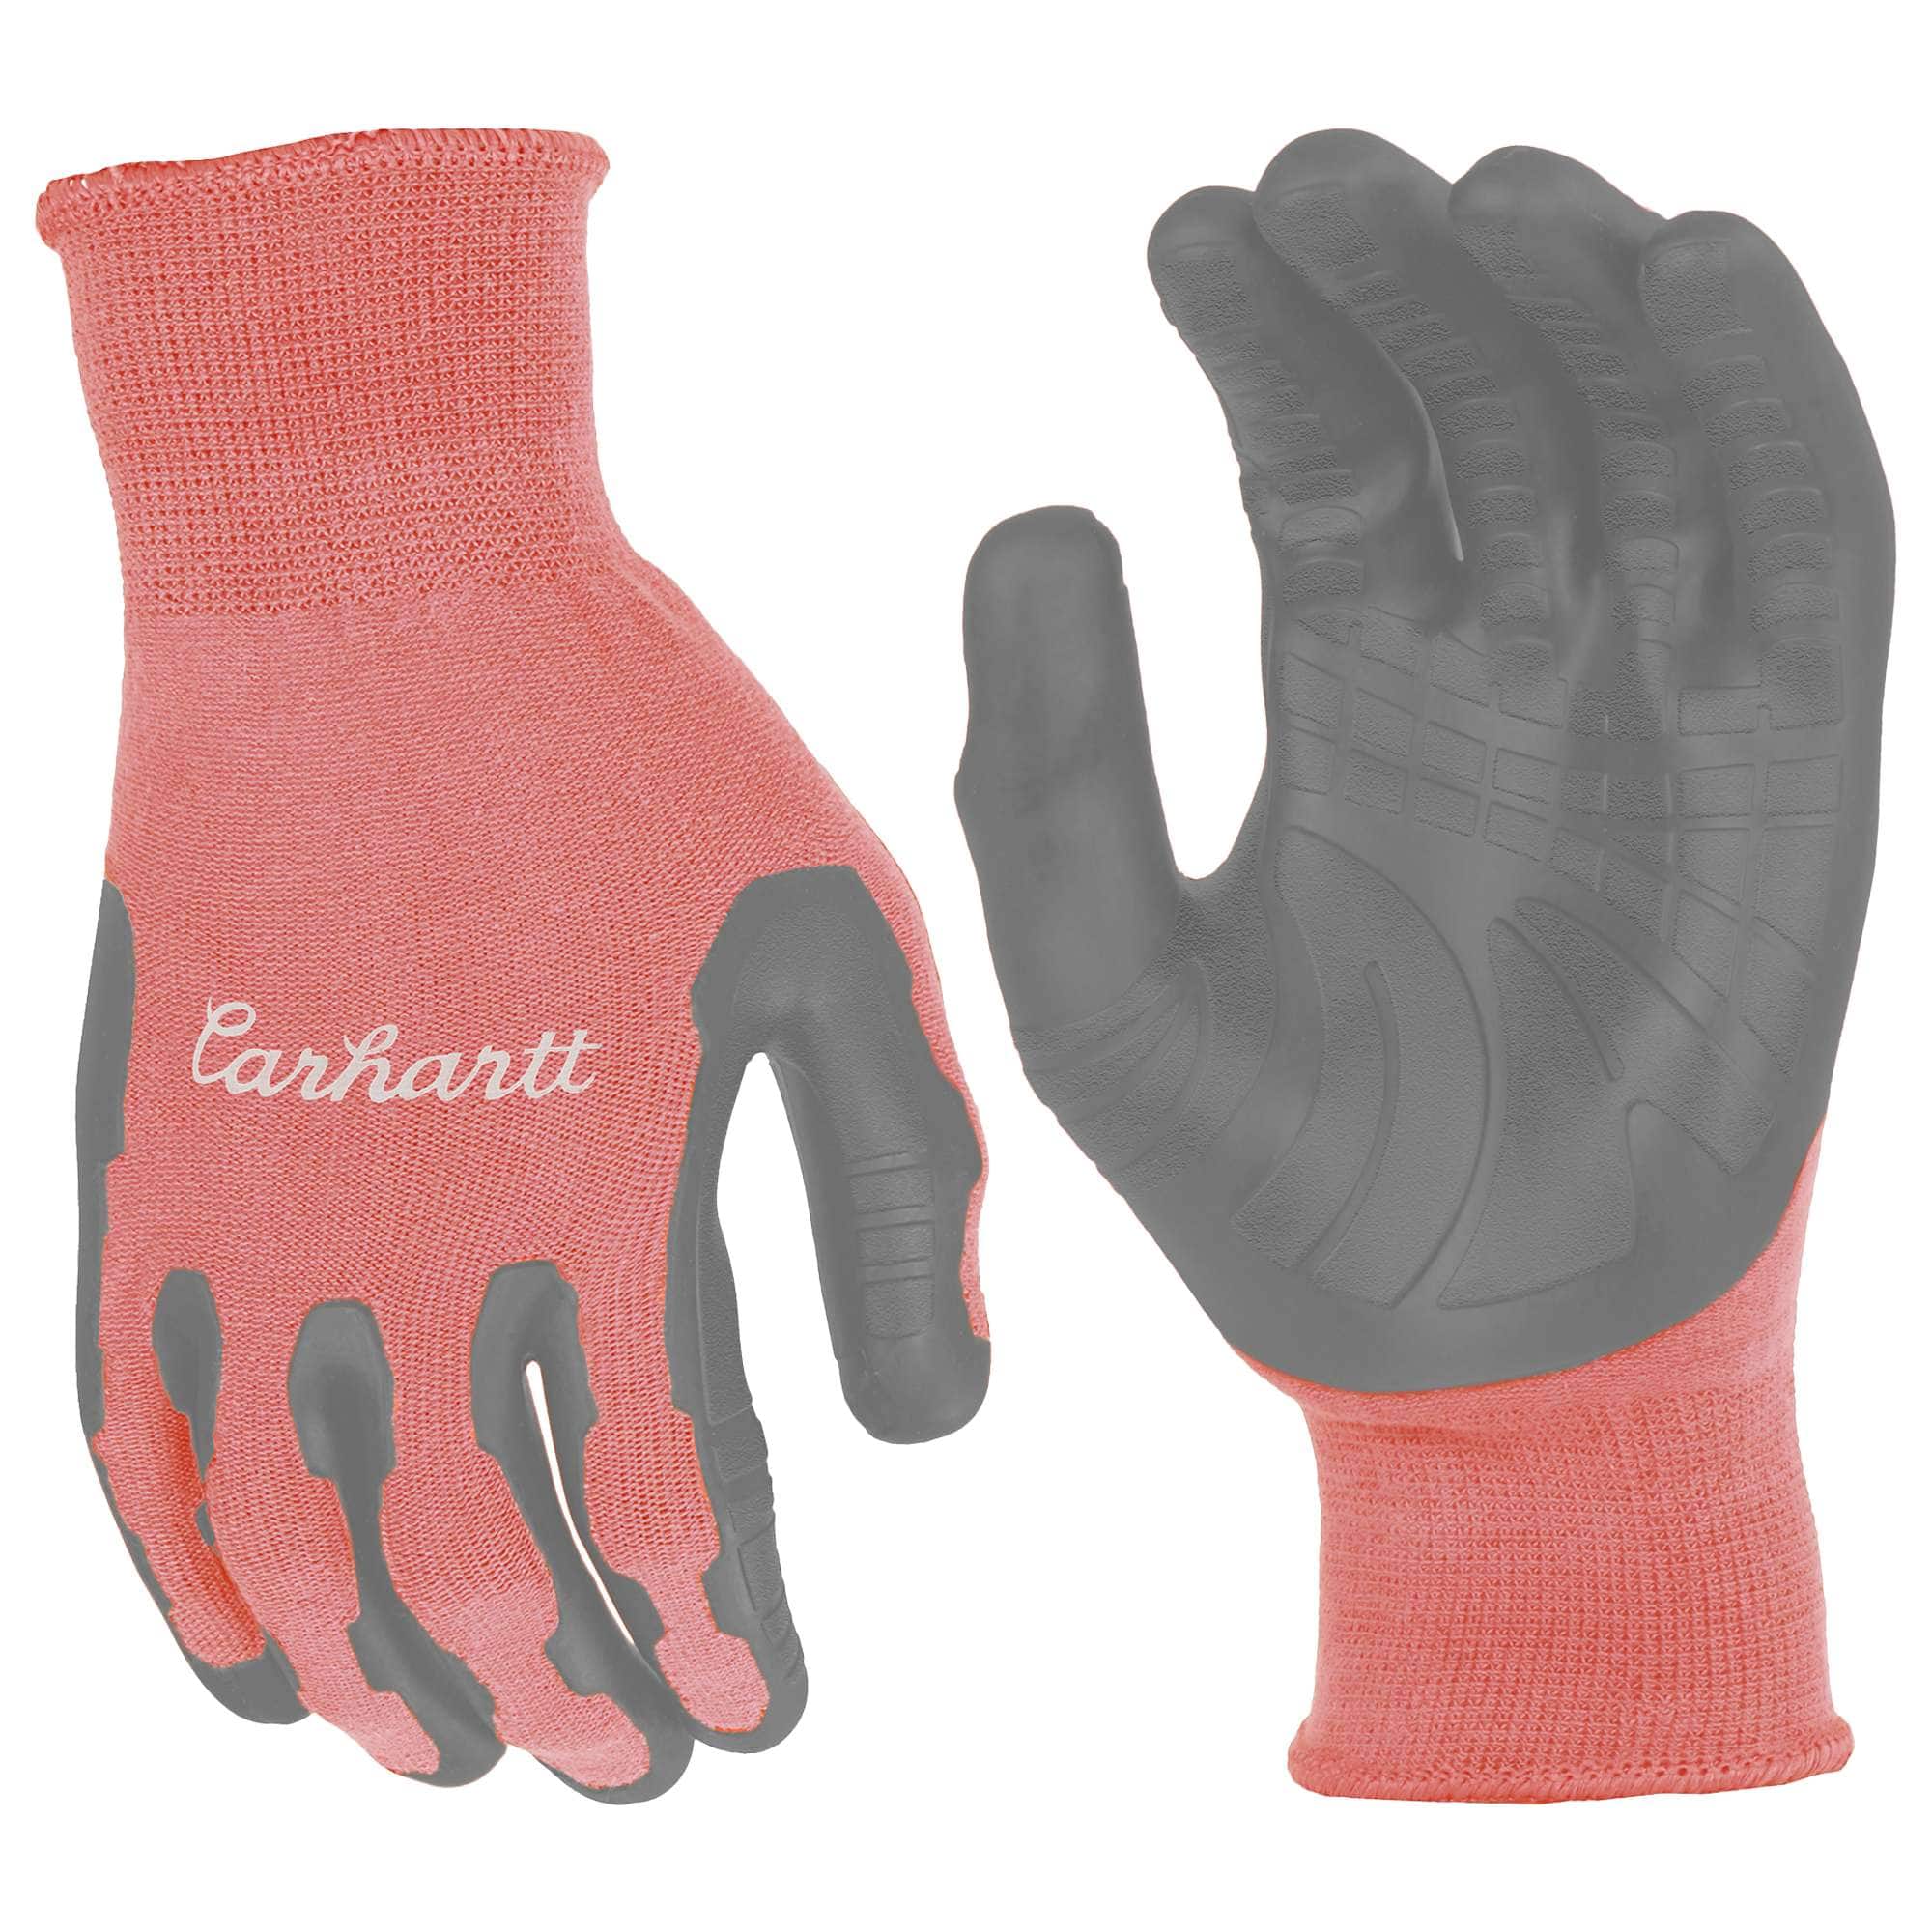 Women's C-Grip Pro Palm Glove